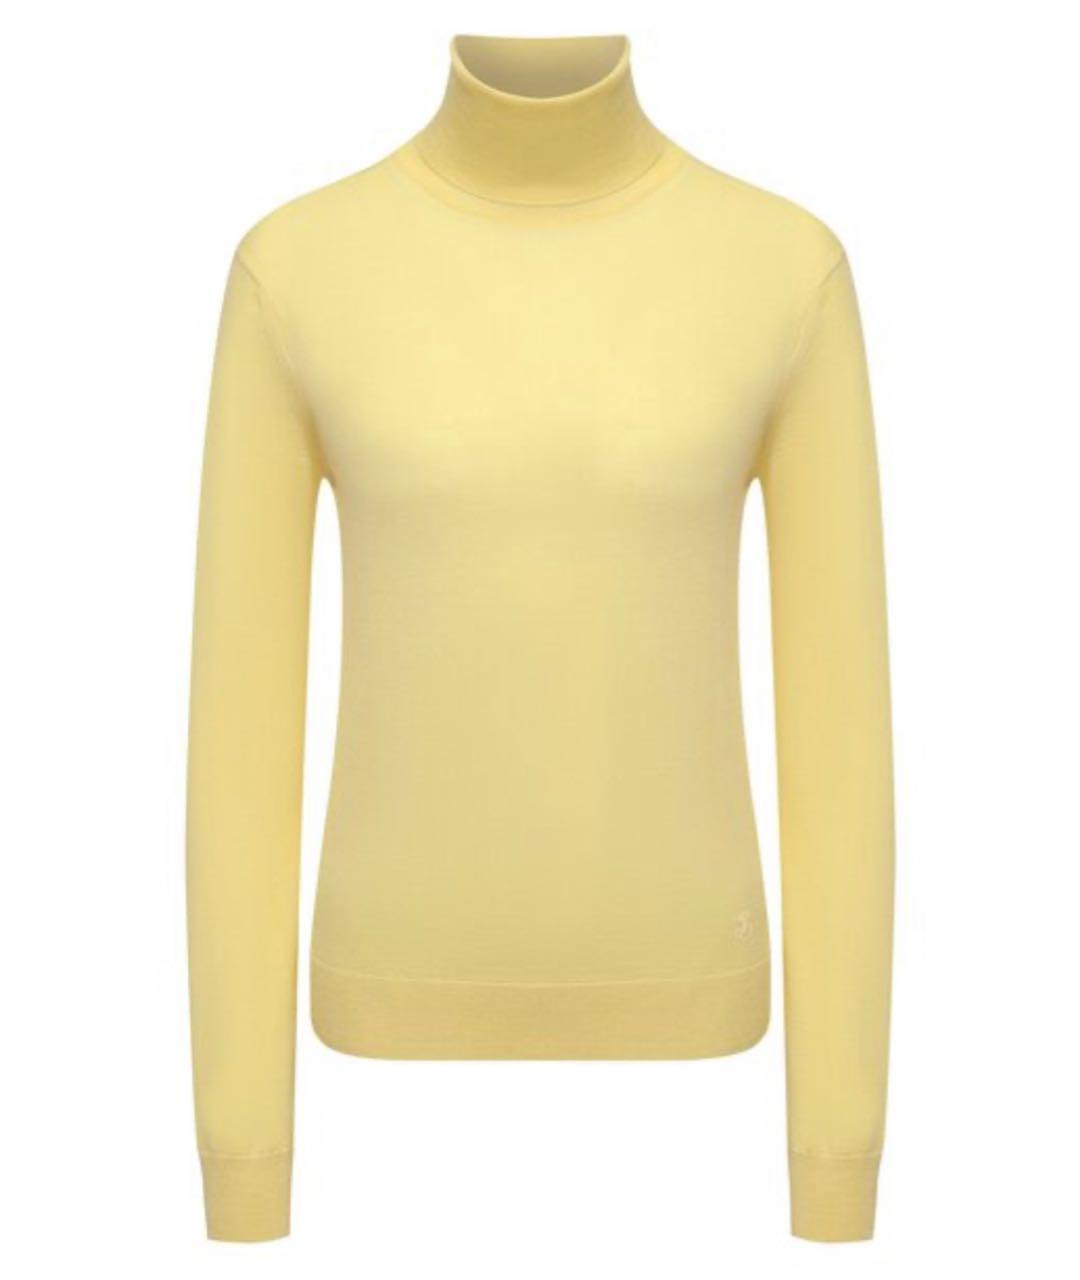 JIL SANDER Желтый шерстяной джемпер / свитер, фото 1